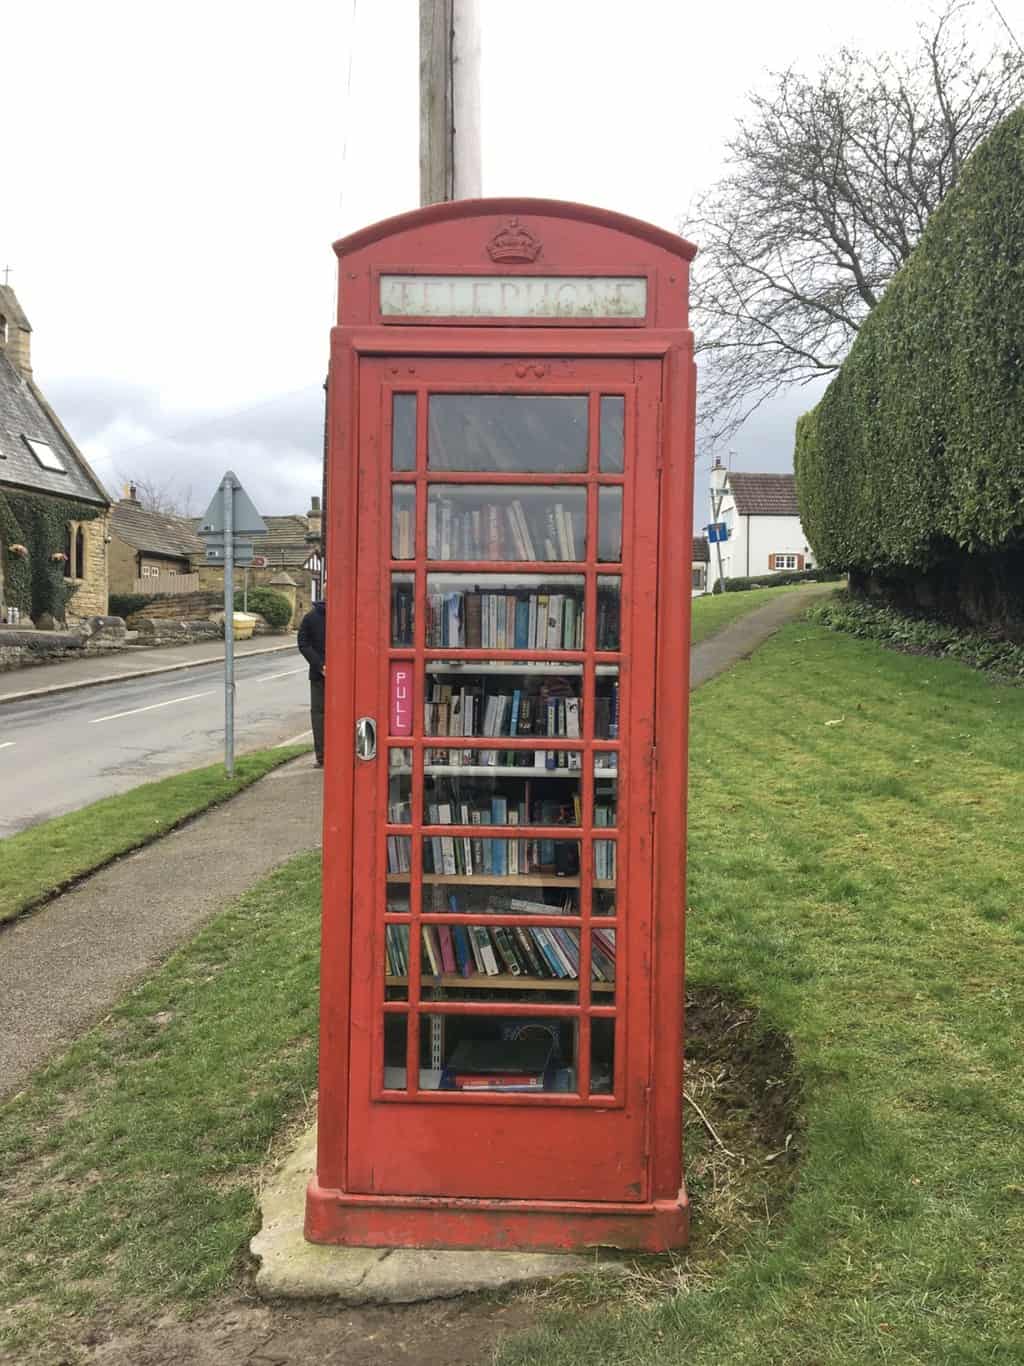 Linton Phone Box Library, North Yorkshire